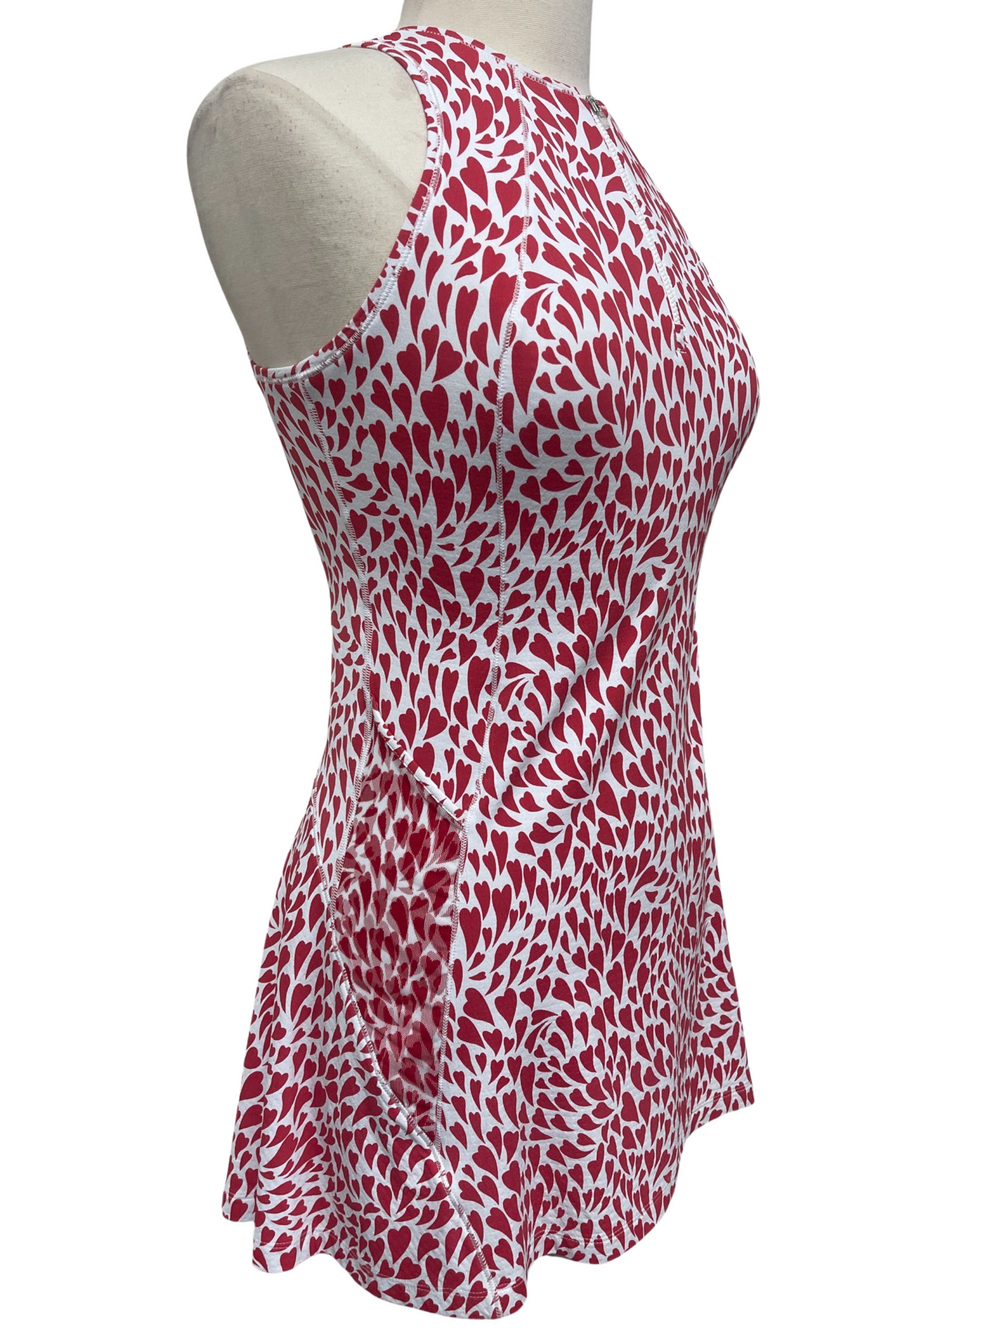 IBKUL Red/White Davina Dress - Small - Skorzie